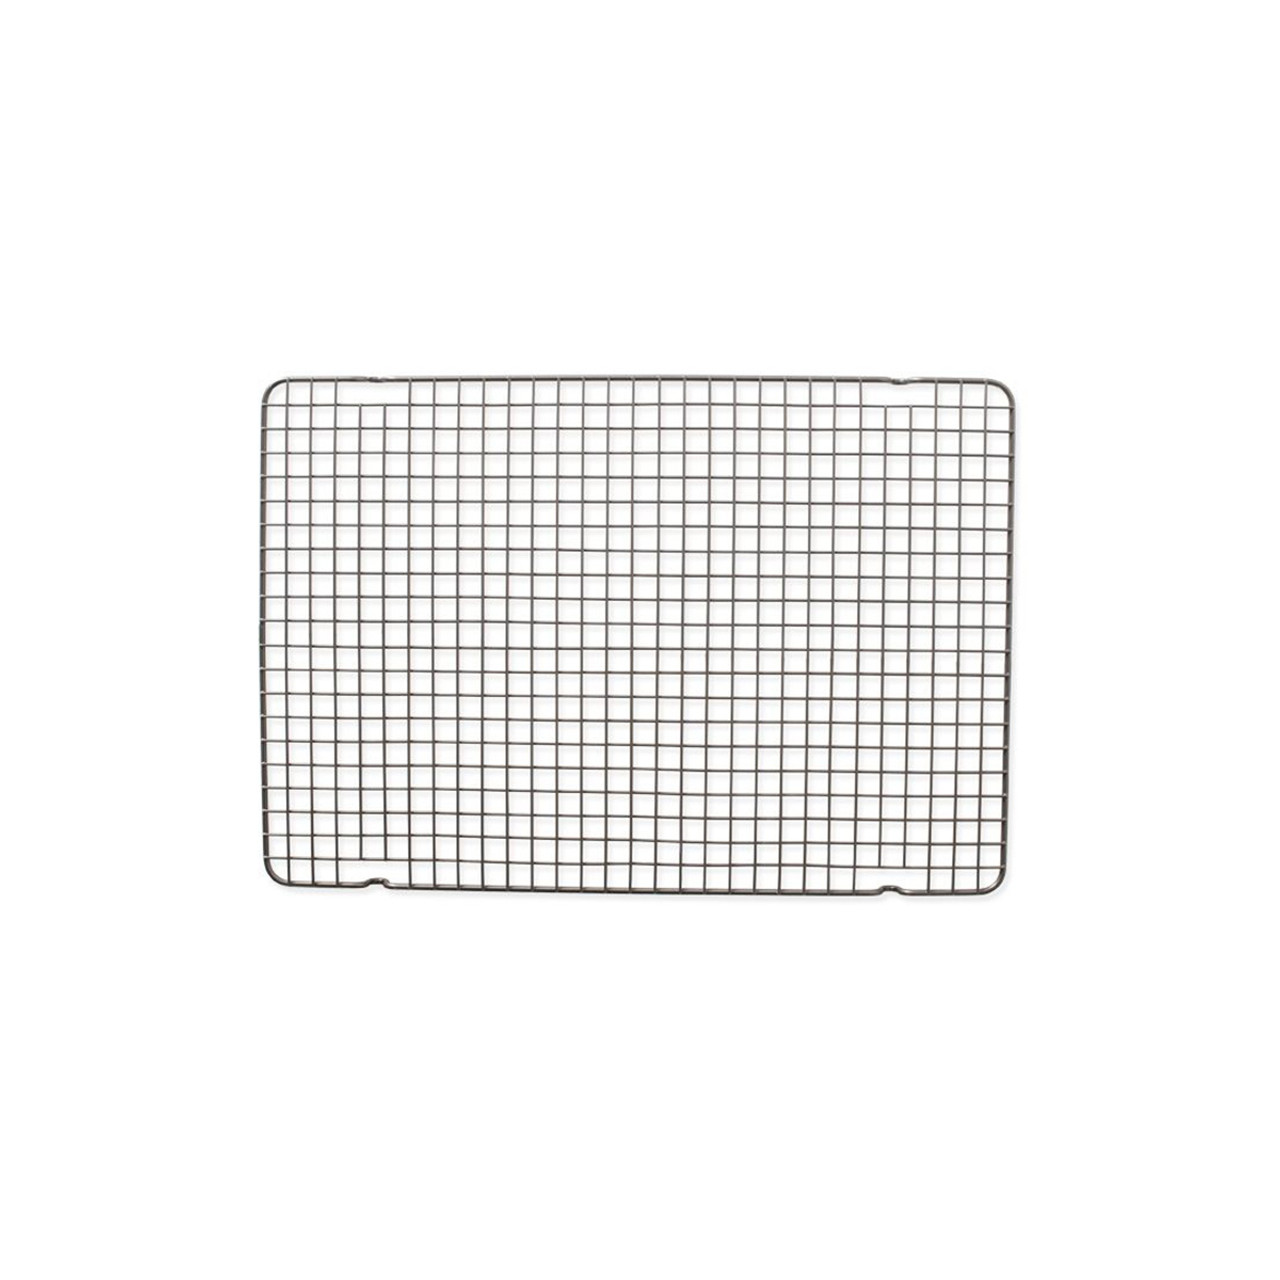 Nordic Ware Half Sheet Pan with Grid Rack